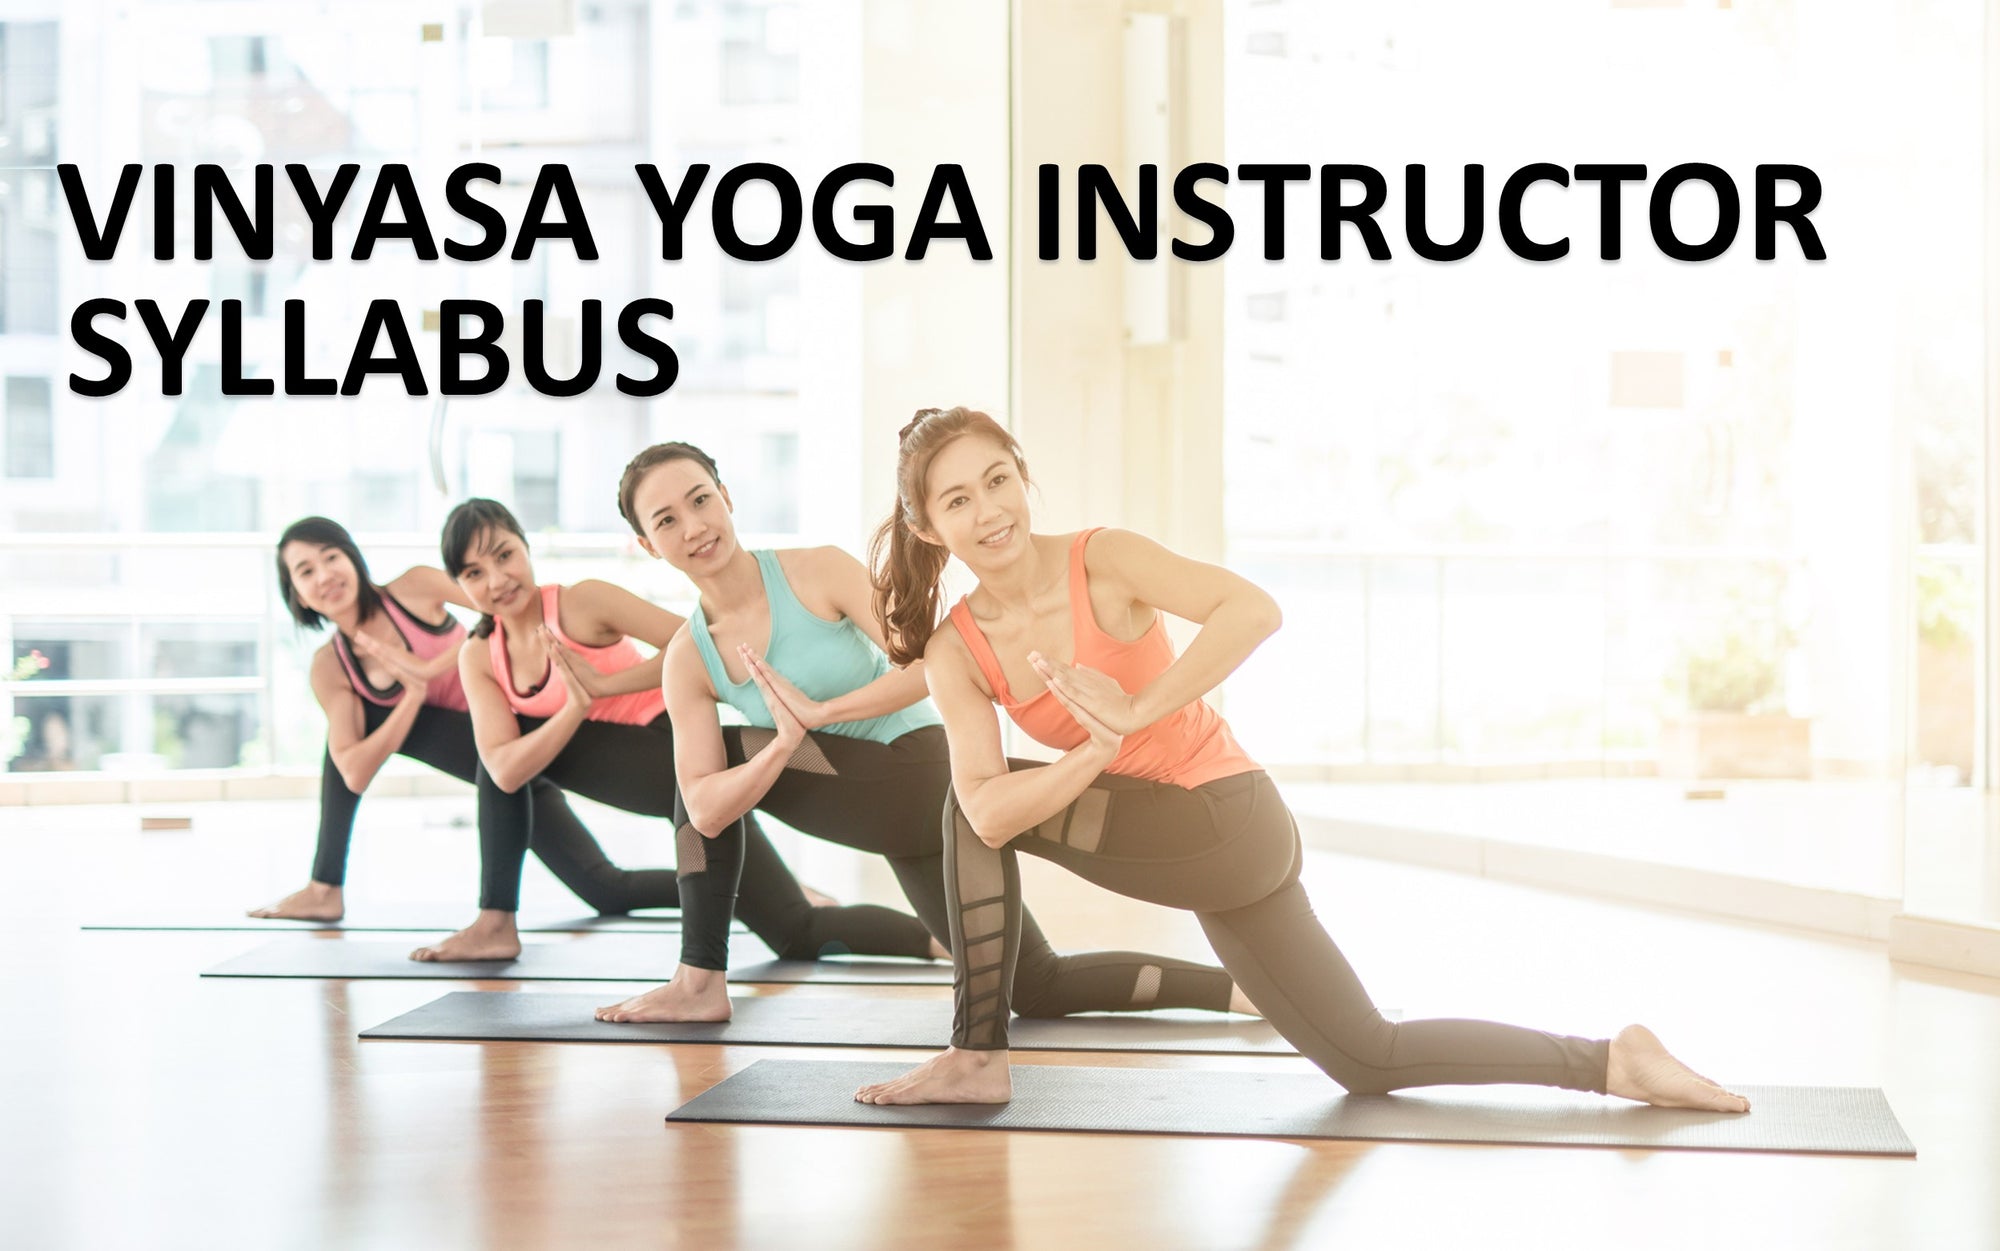 Vinyasa Yoga Instructor Syllabus